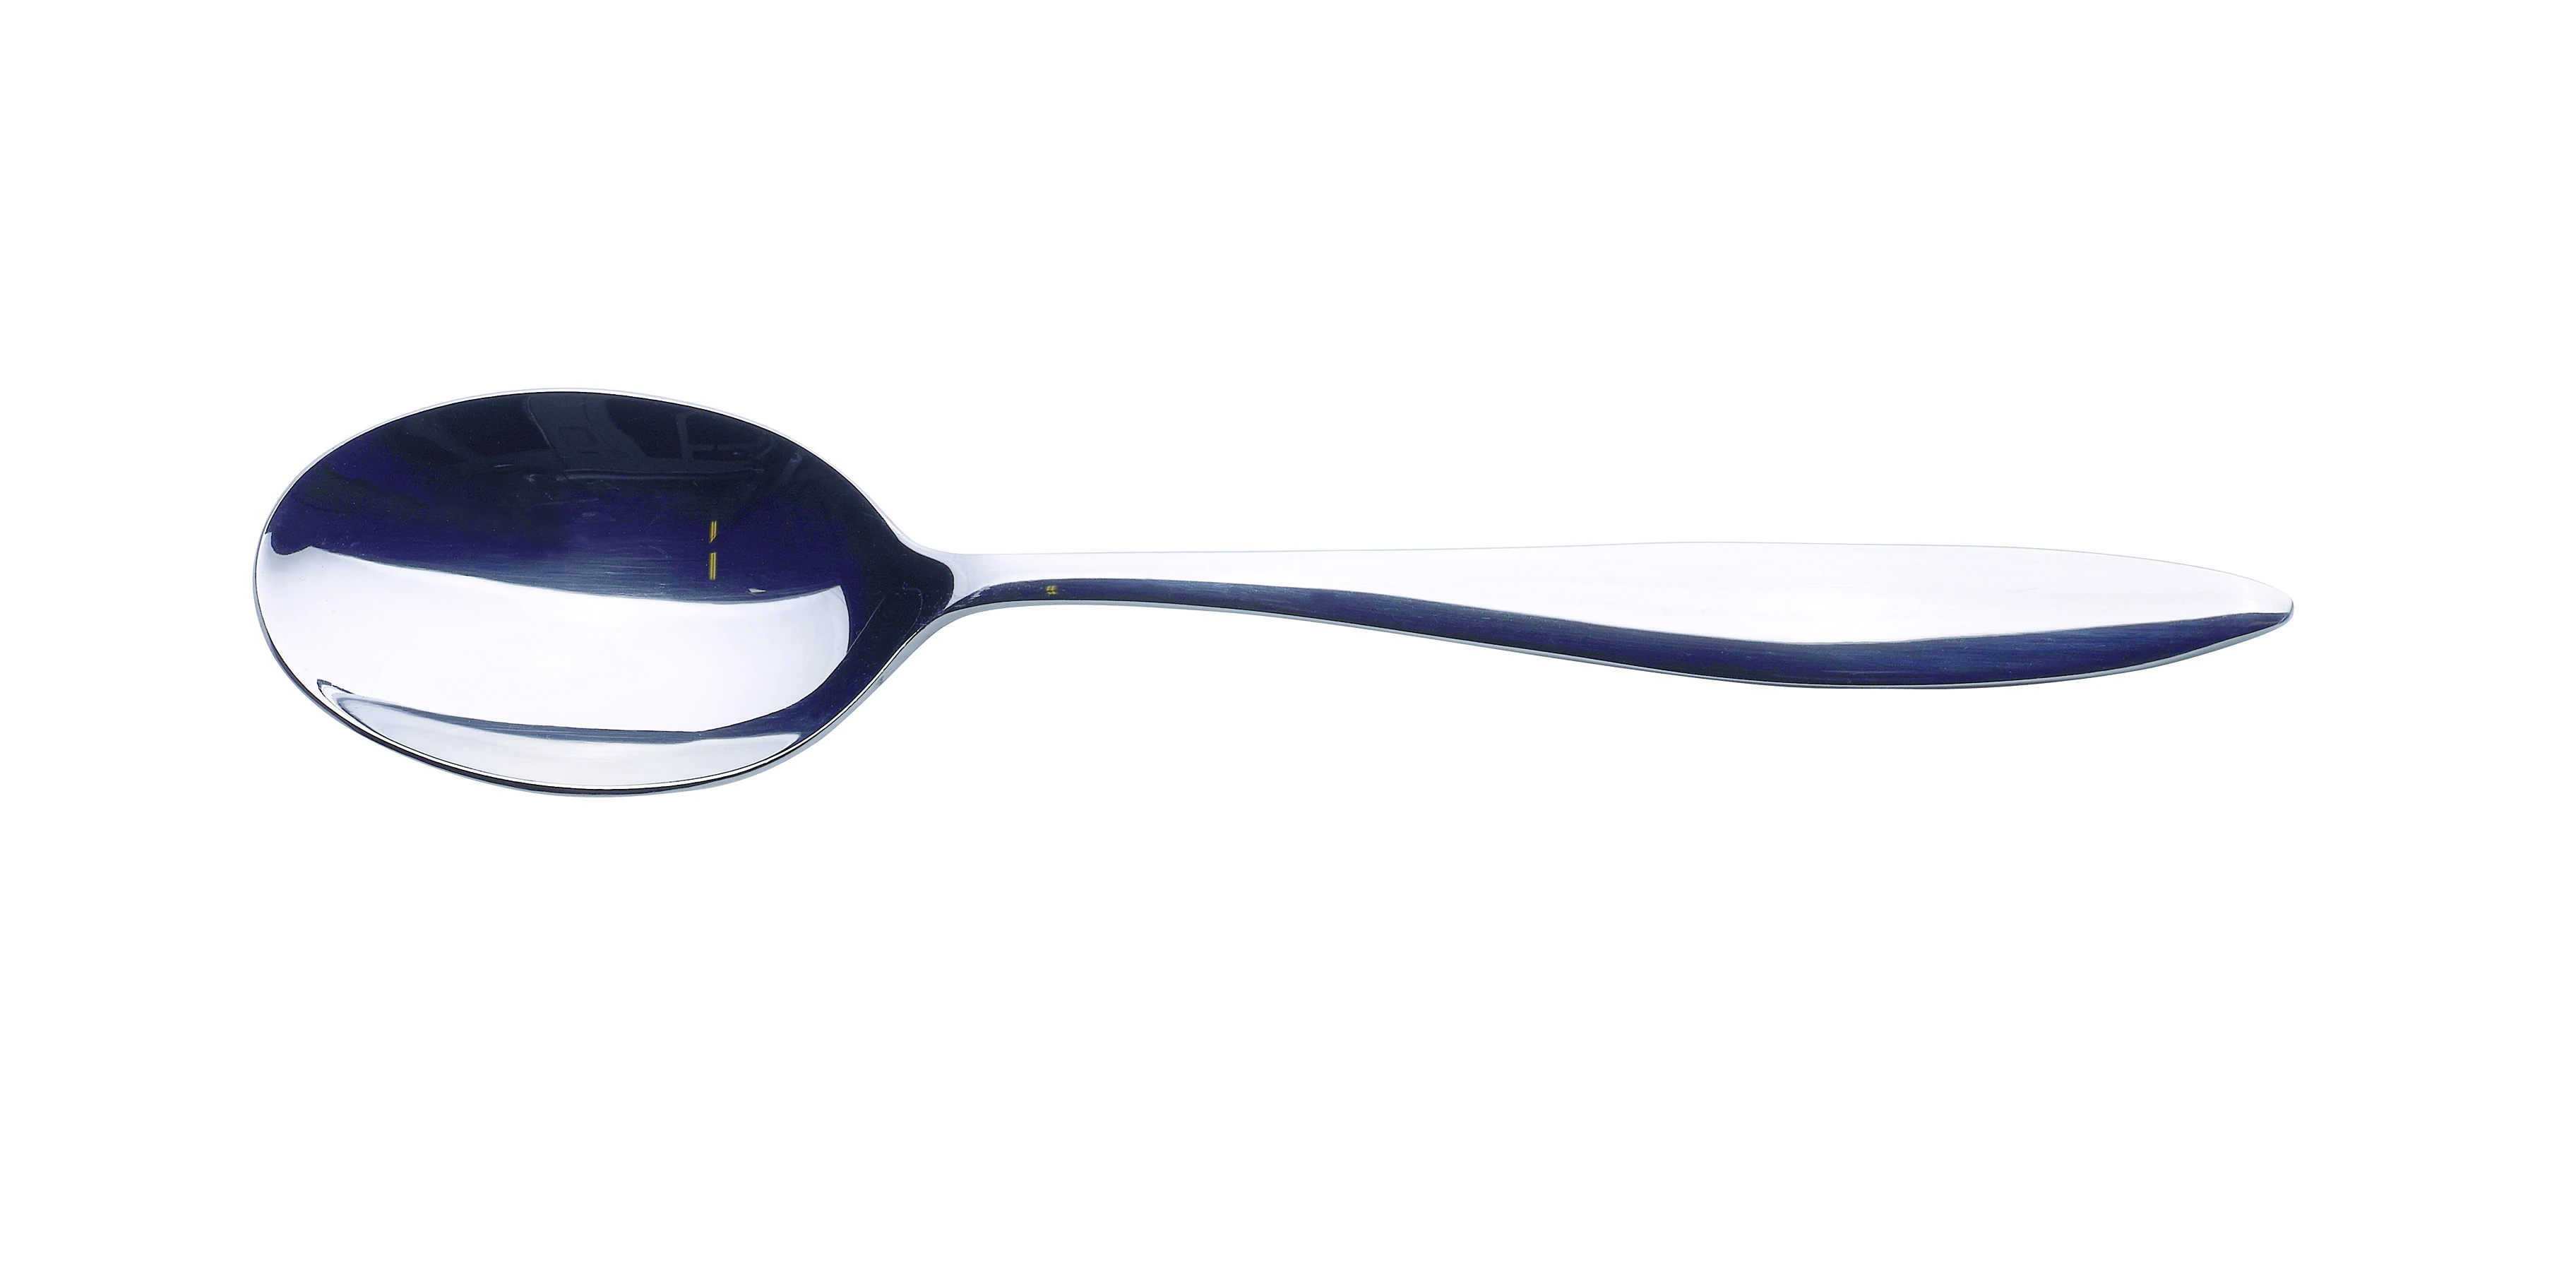 Genware Teardrop Dessert Spoon 18/0 (Dozen)